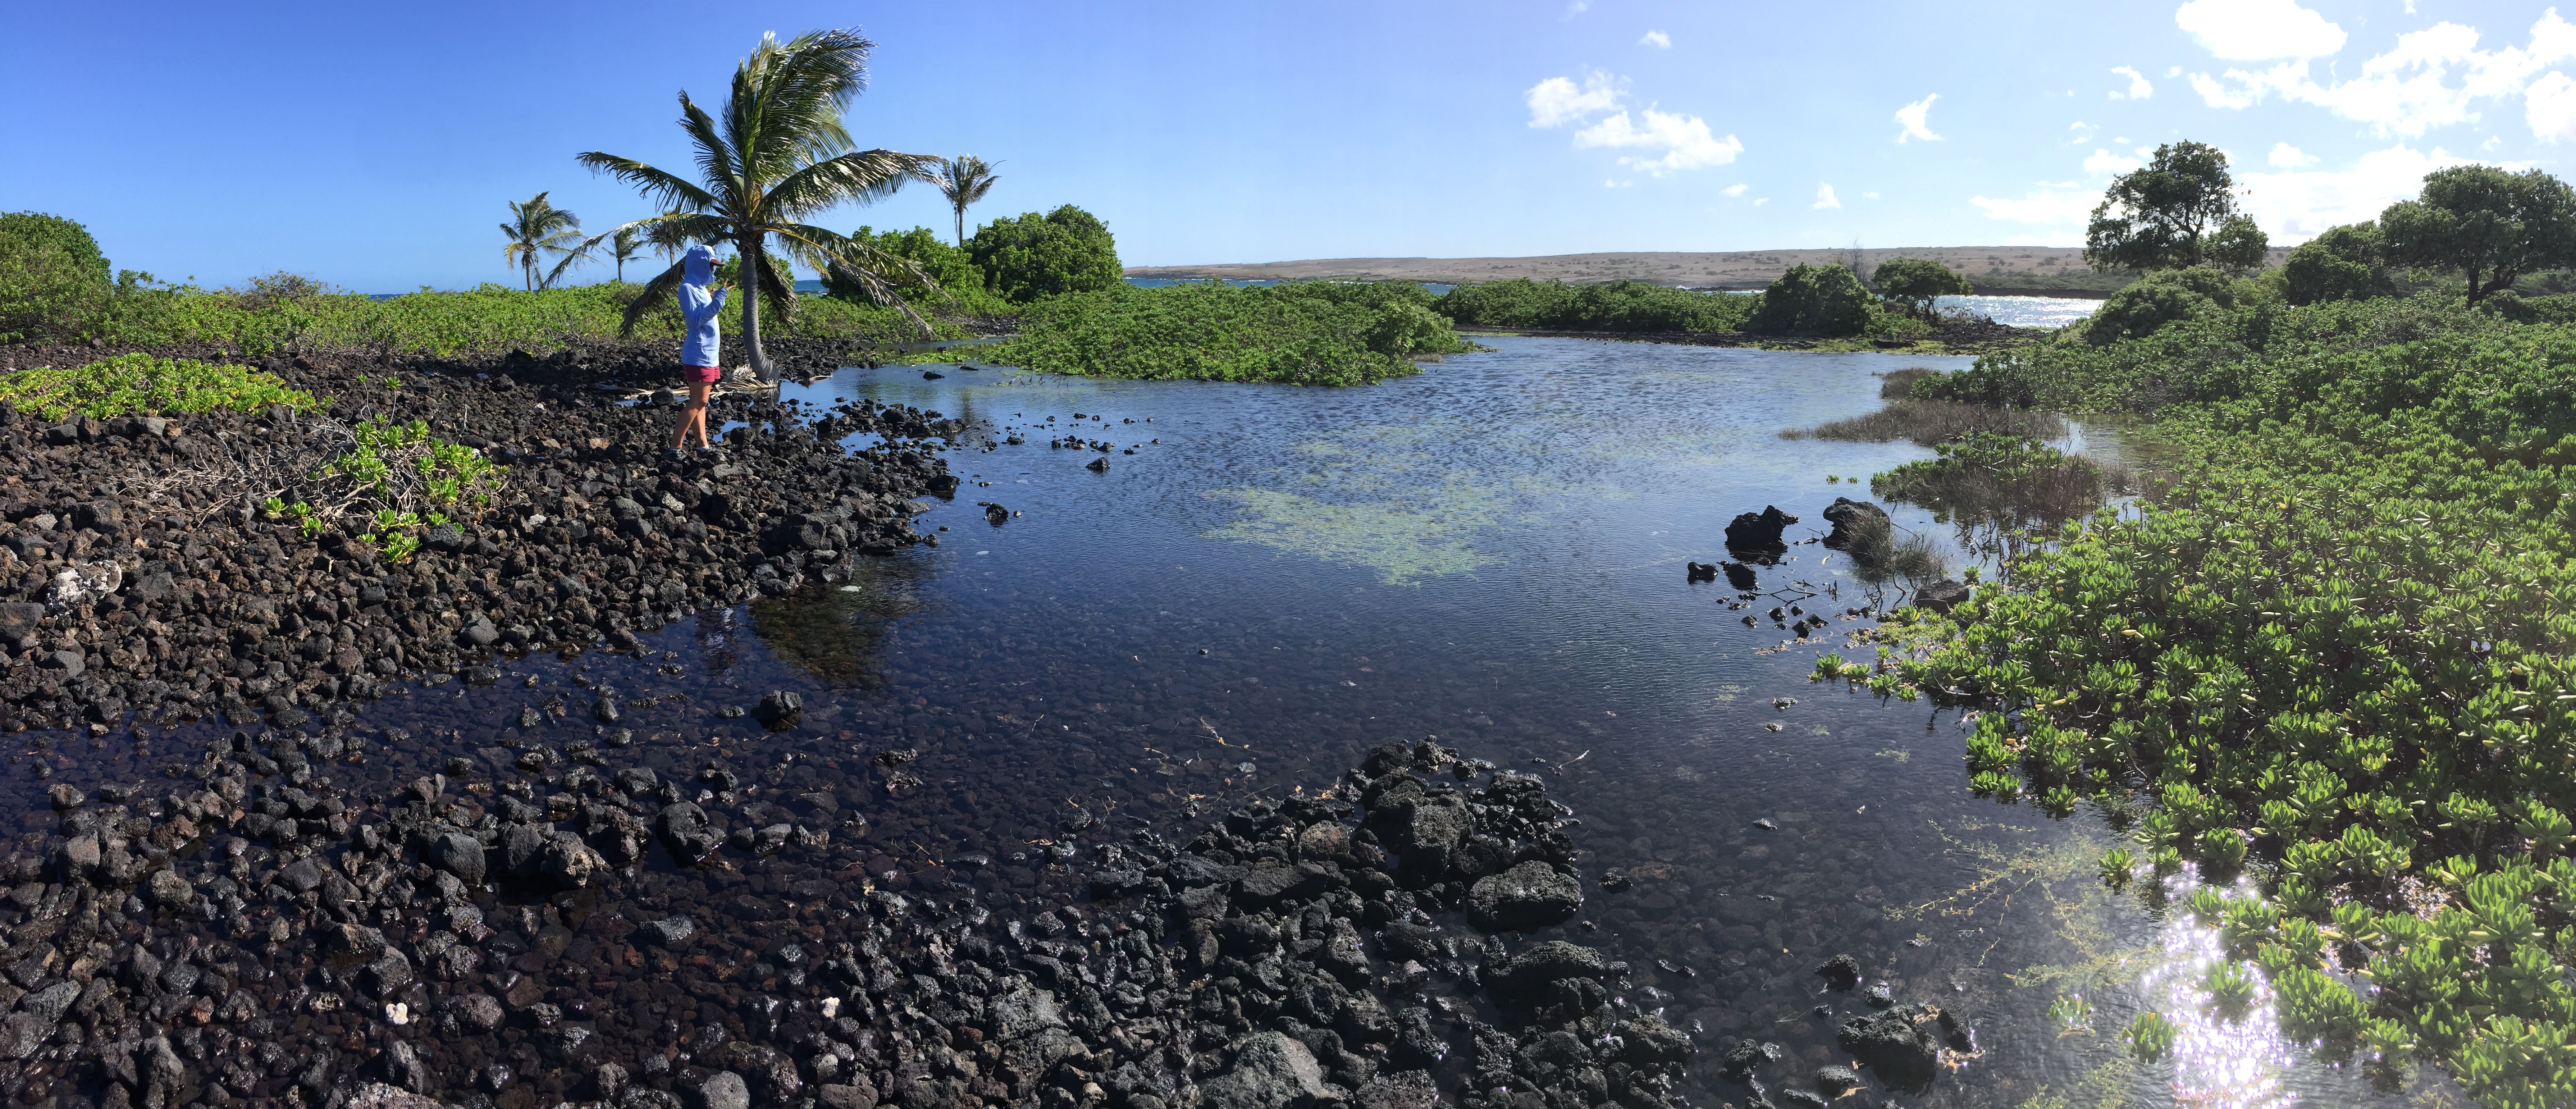 Preservation of Kiolakaʻa protects critical natural resources and cultural sites
(Photo Credit: Ala Kahakai Trail Association)